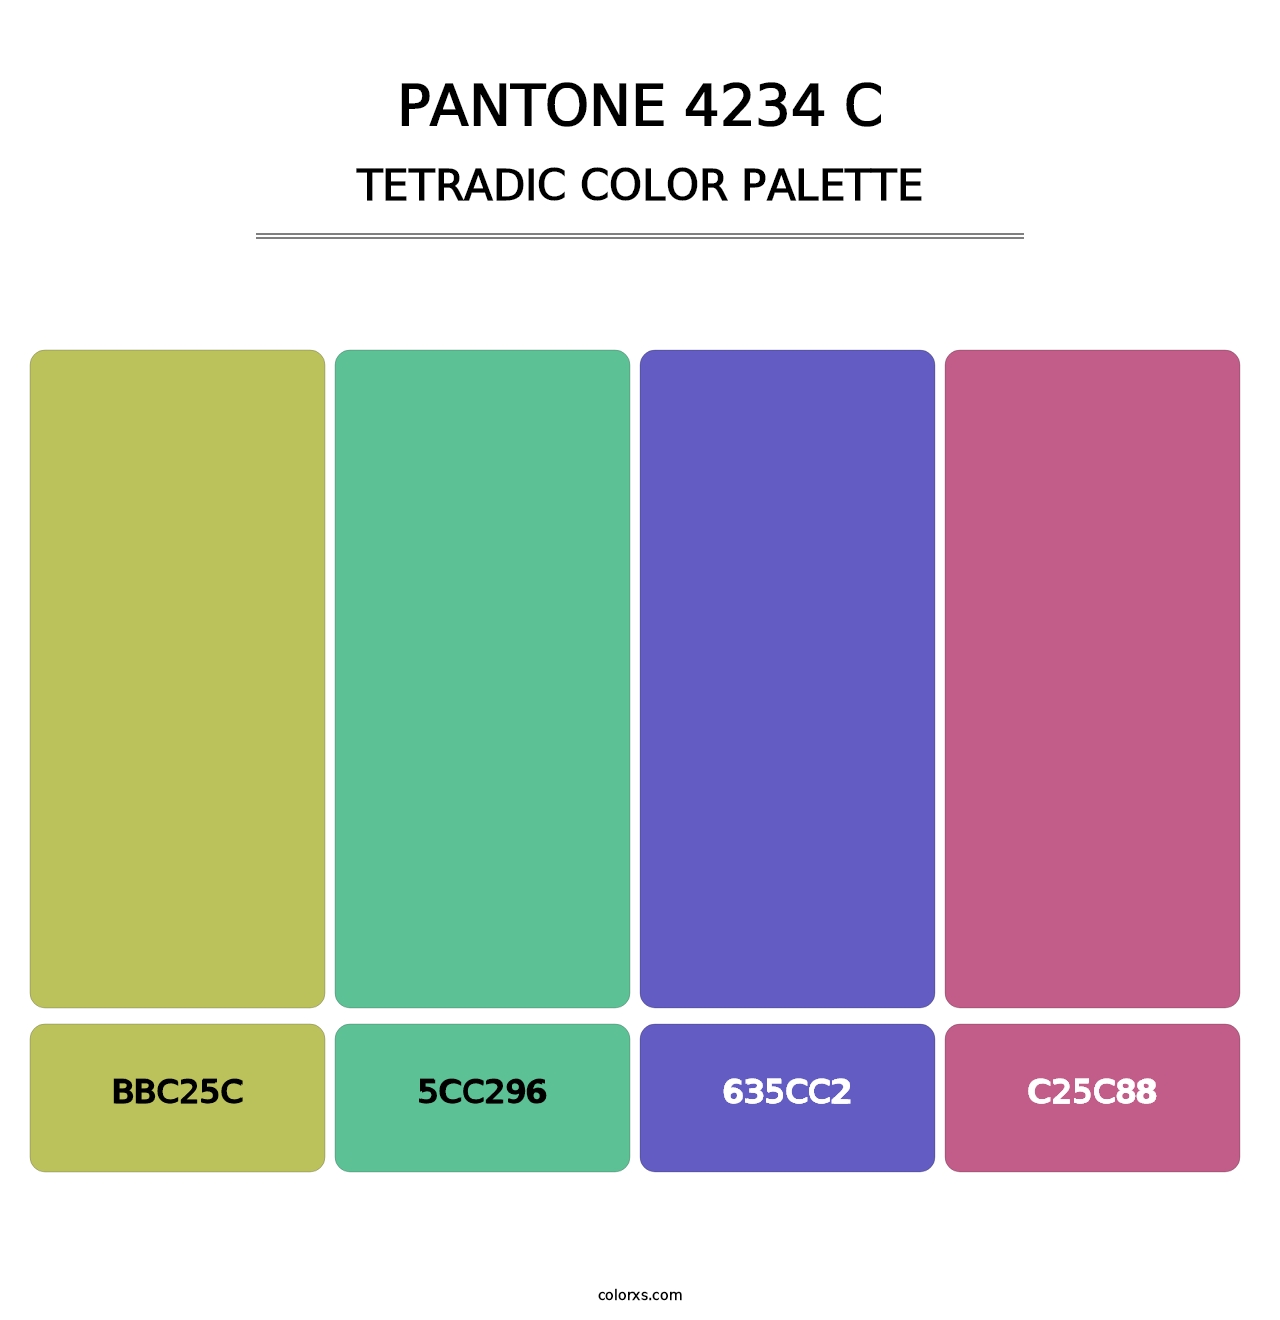 PANTONE 4234 C - Tetradic Color Palette